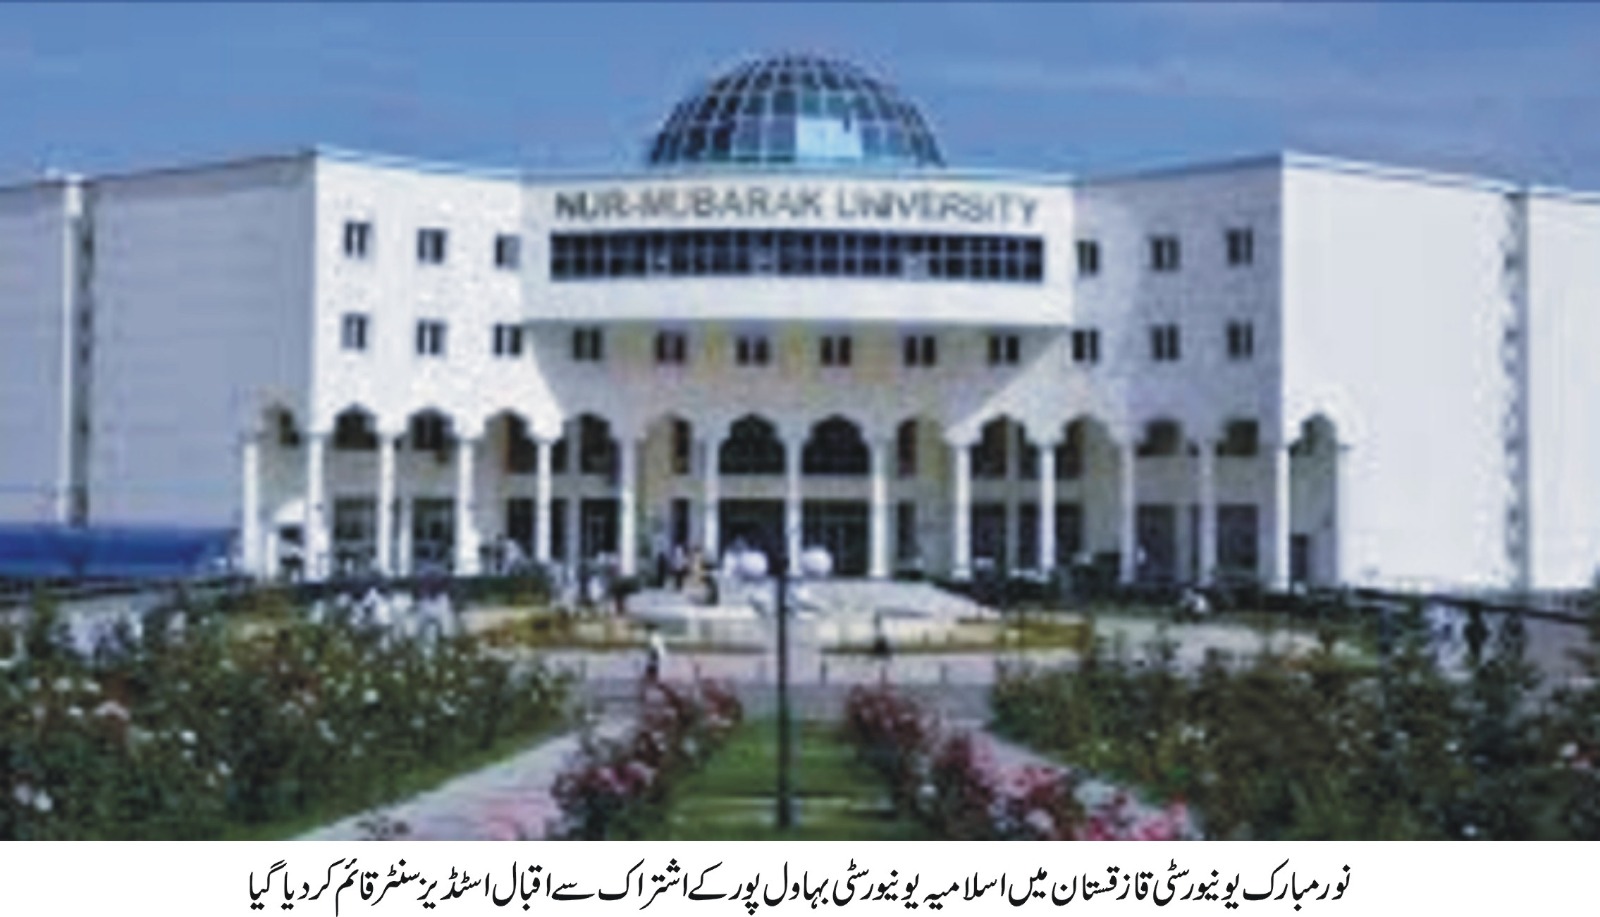 iqbal center at kazhakstan urdu